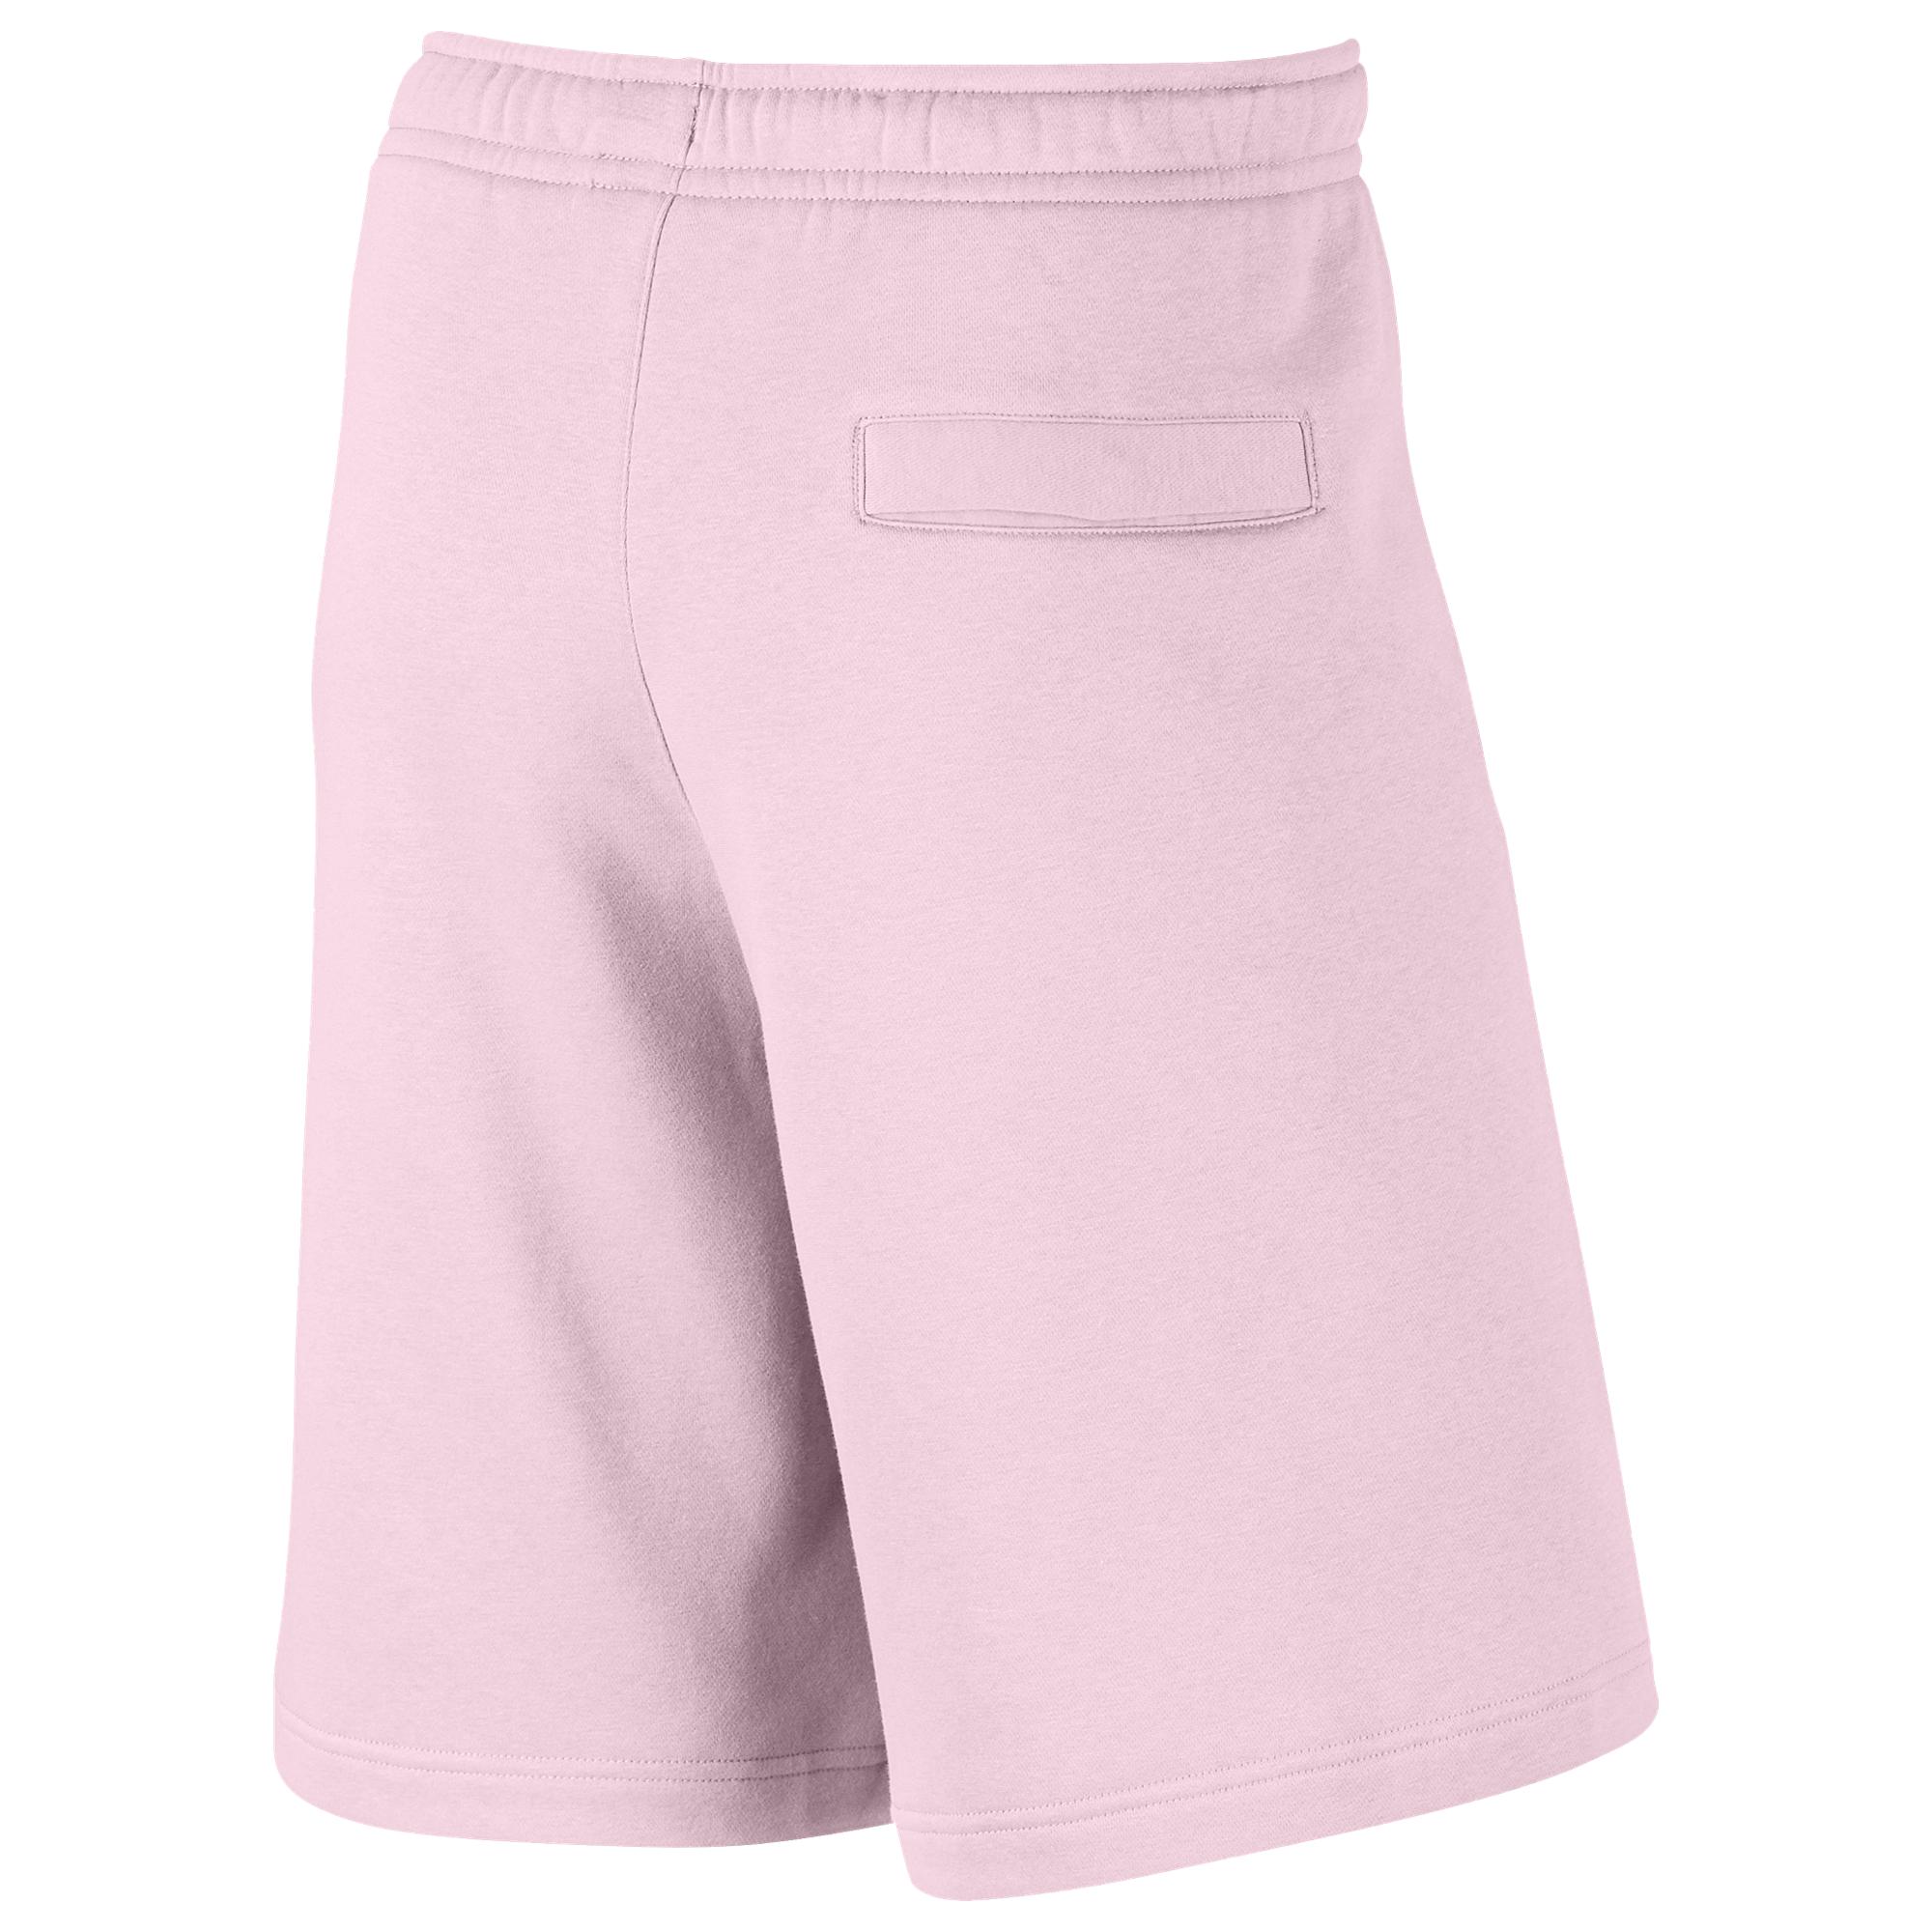 nike sweat shorts pink